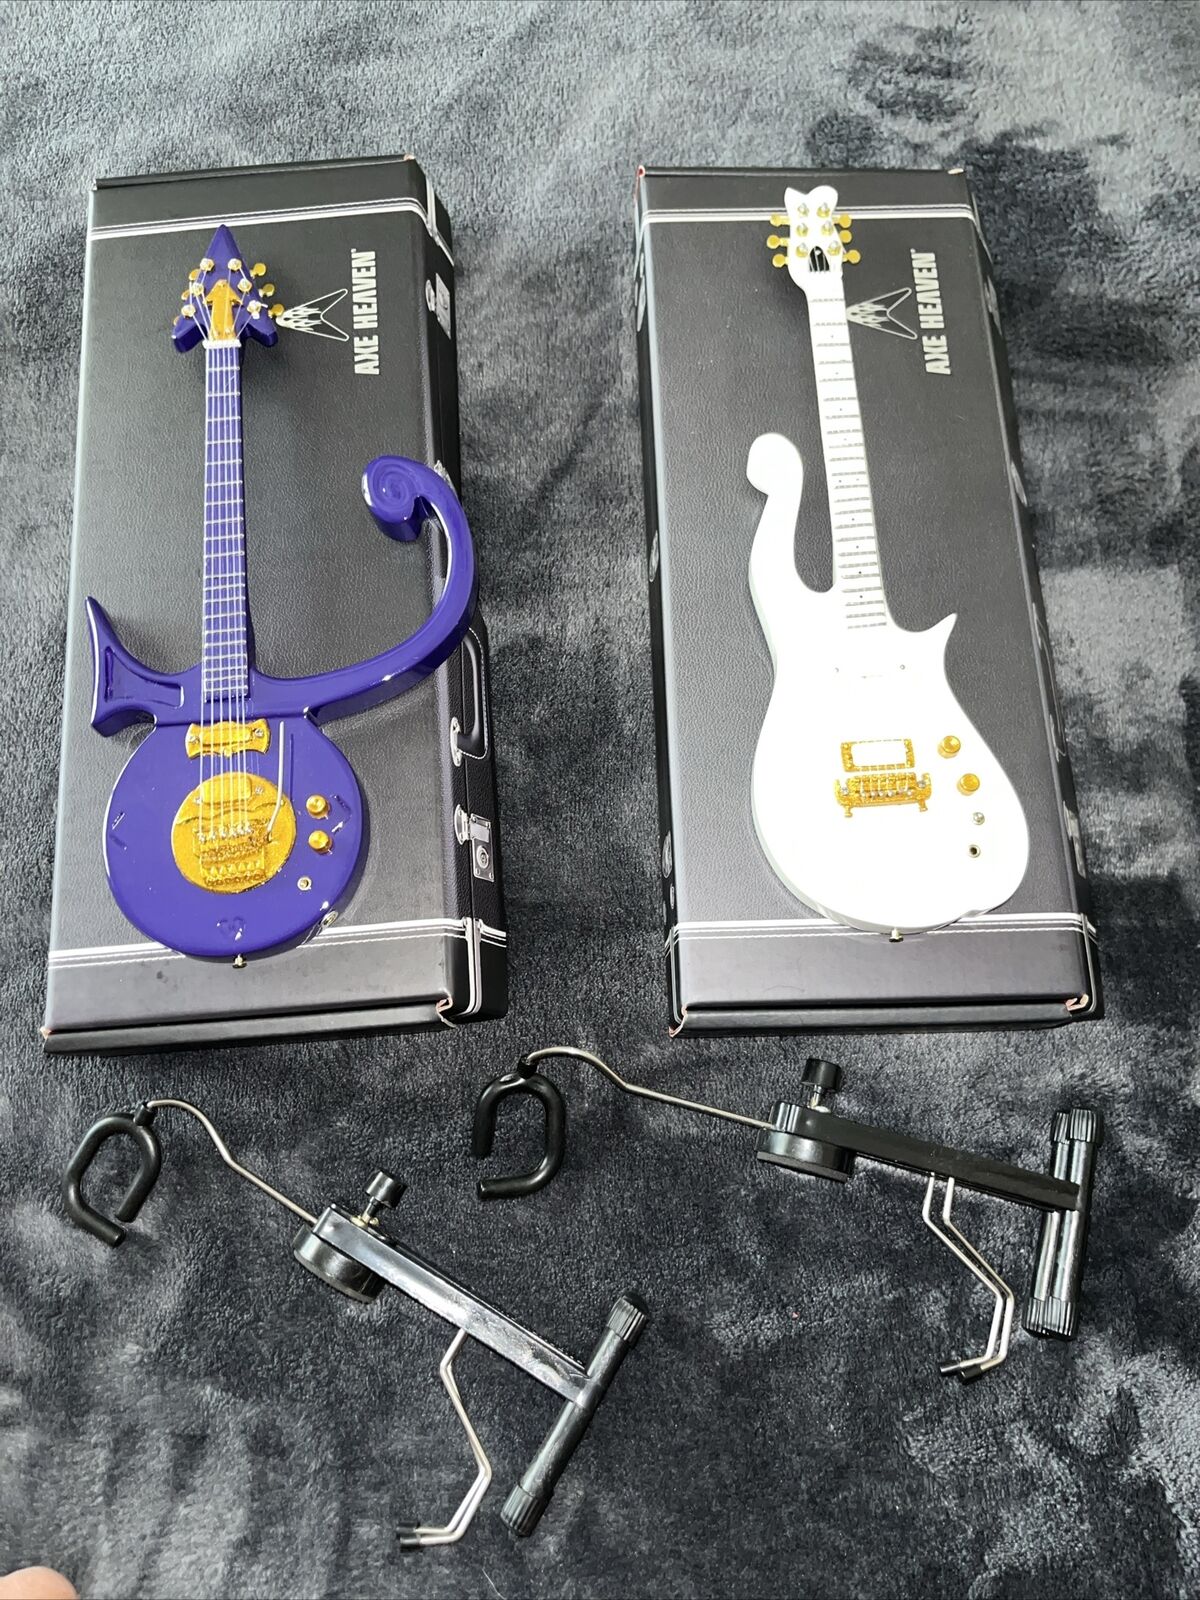 1/6 Scale AXE HEAVEN Miniature Model Guitar Collectible Replica w/stand PRINCE